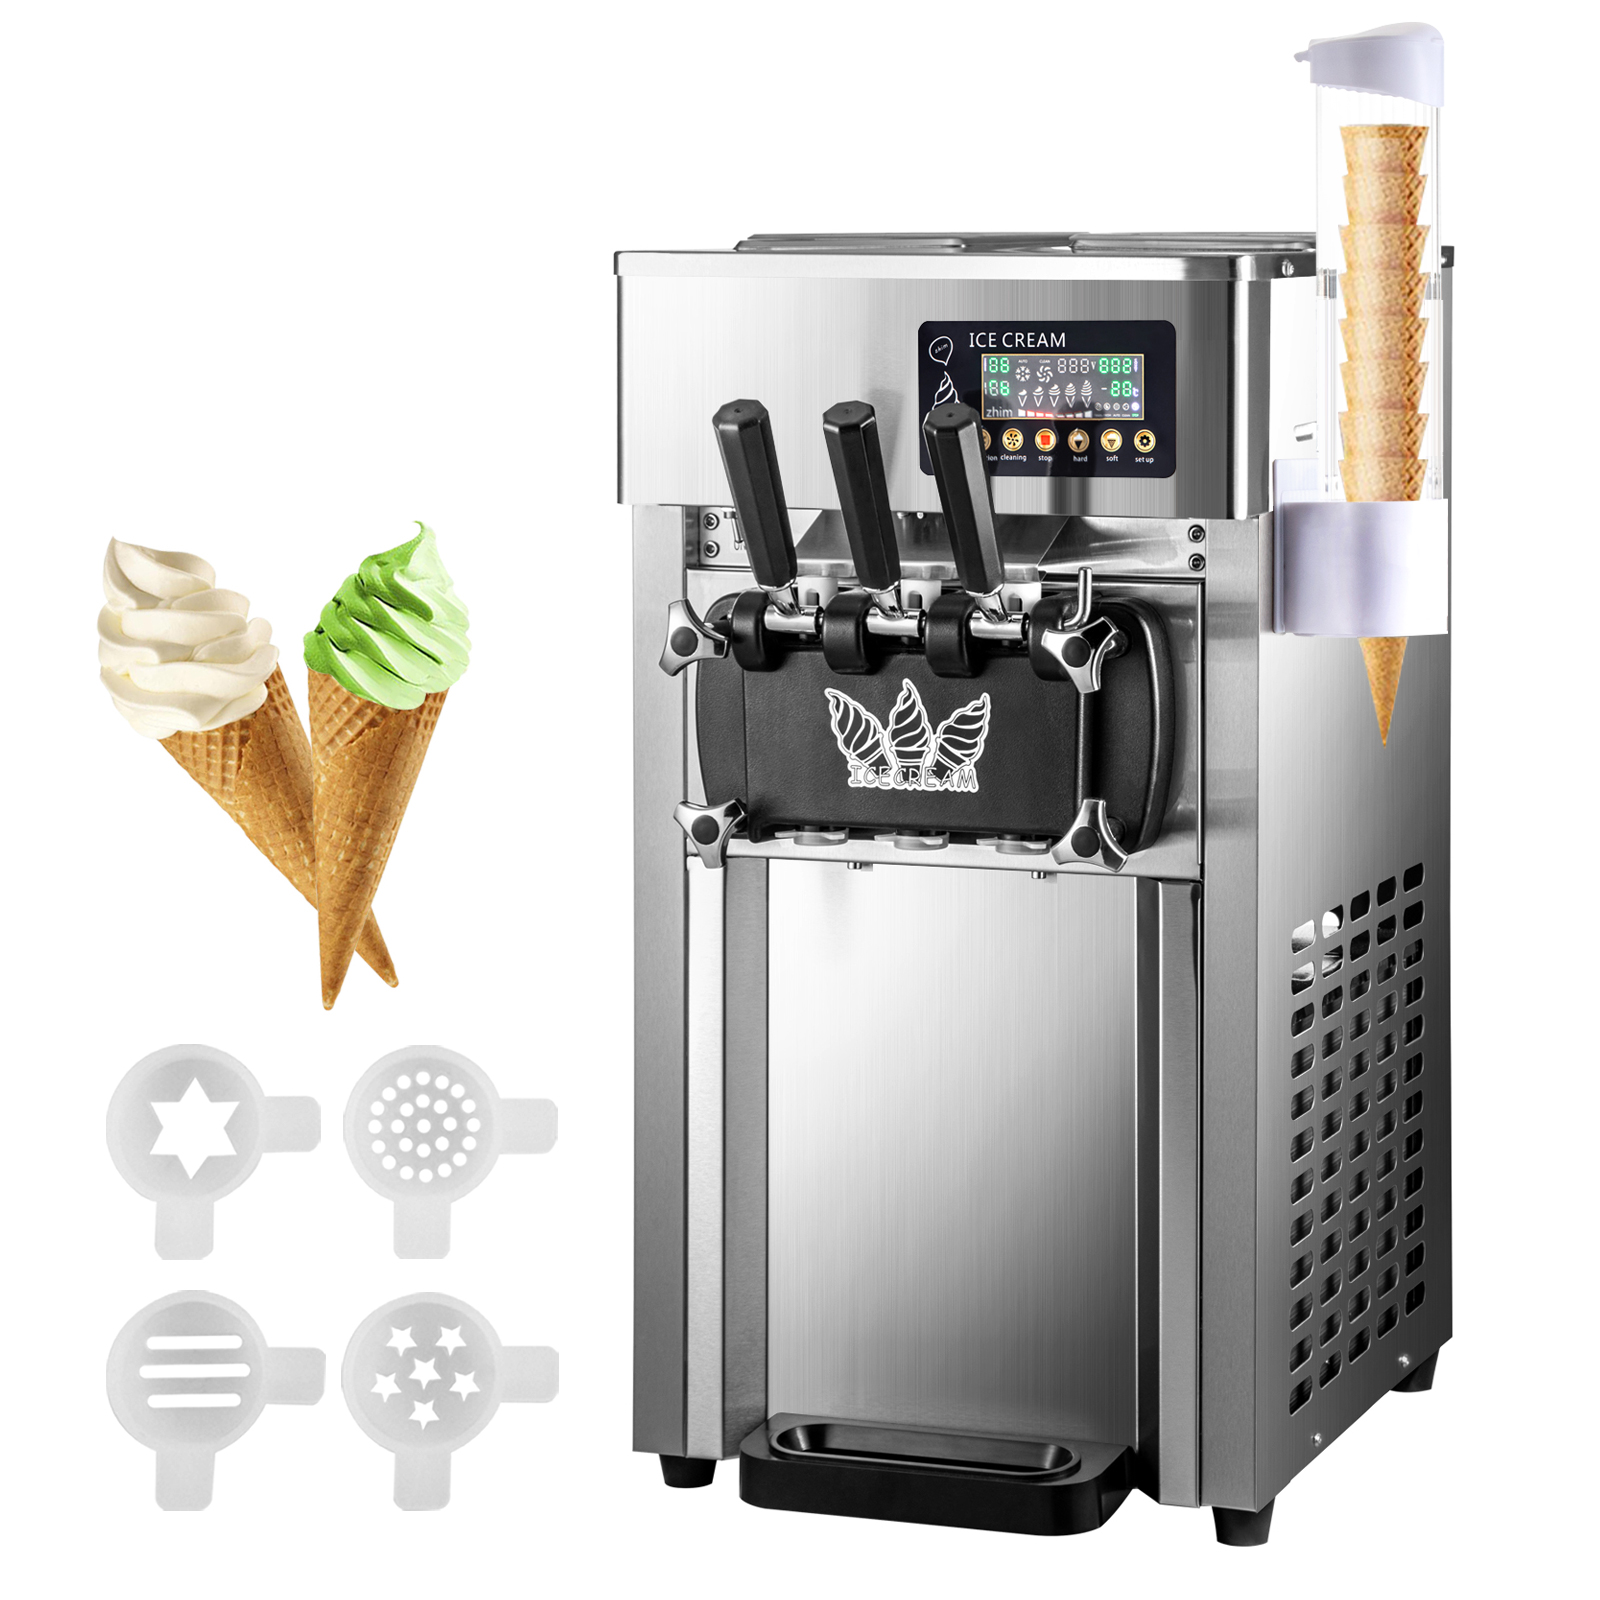 VEVOR Commercial Ice Cream Maker Machine, 2+1 Flavor Countertop Soft Serve Machine, 5 Gal/H Commercial Ice Cream Maker w/Two 3L Hoppers от Vevor Many GEOs